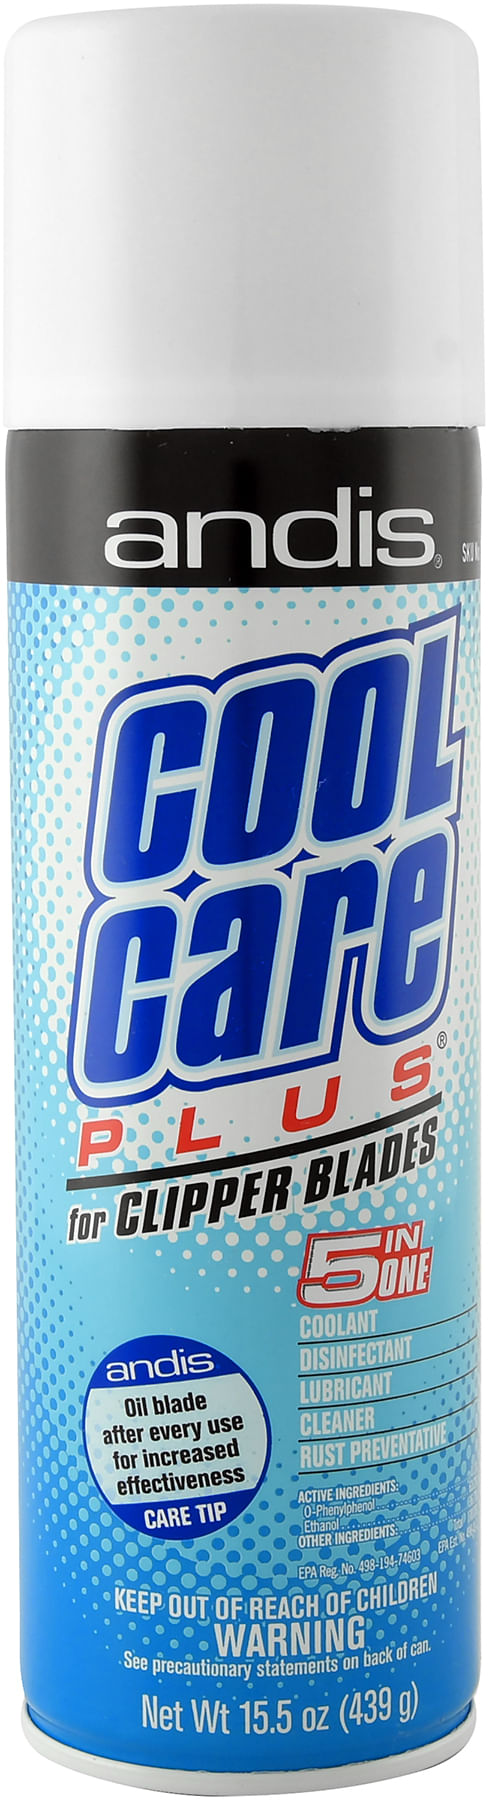 Cool-Care-Plus-15.5-oz